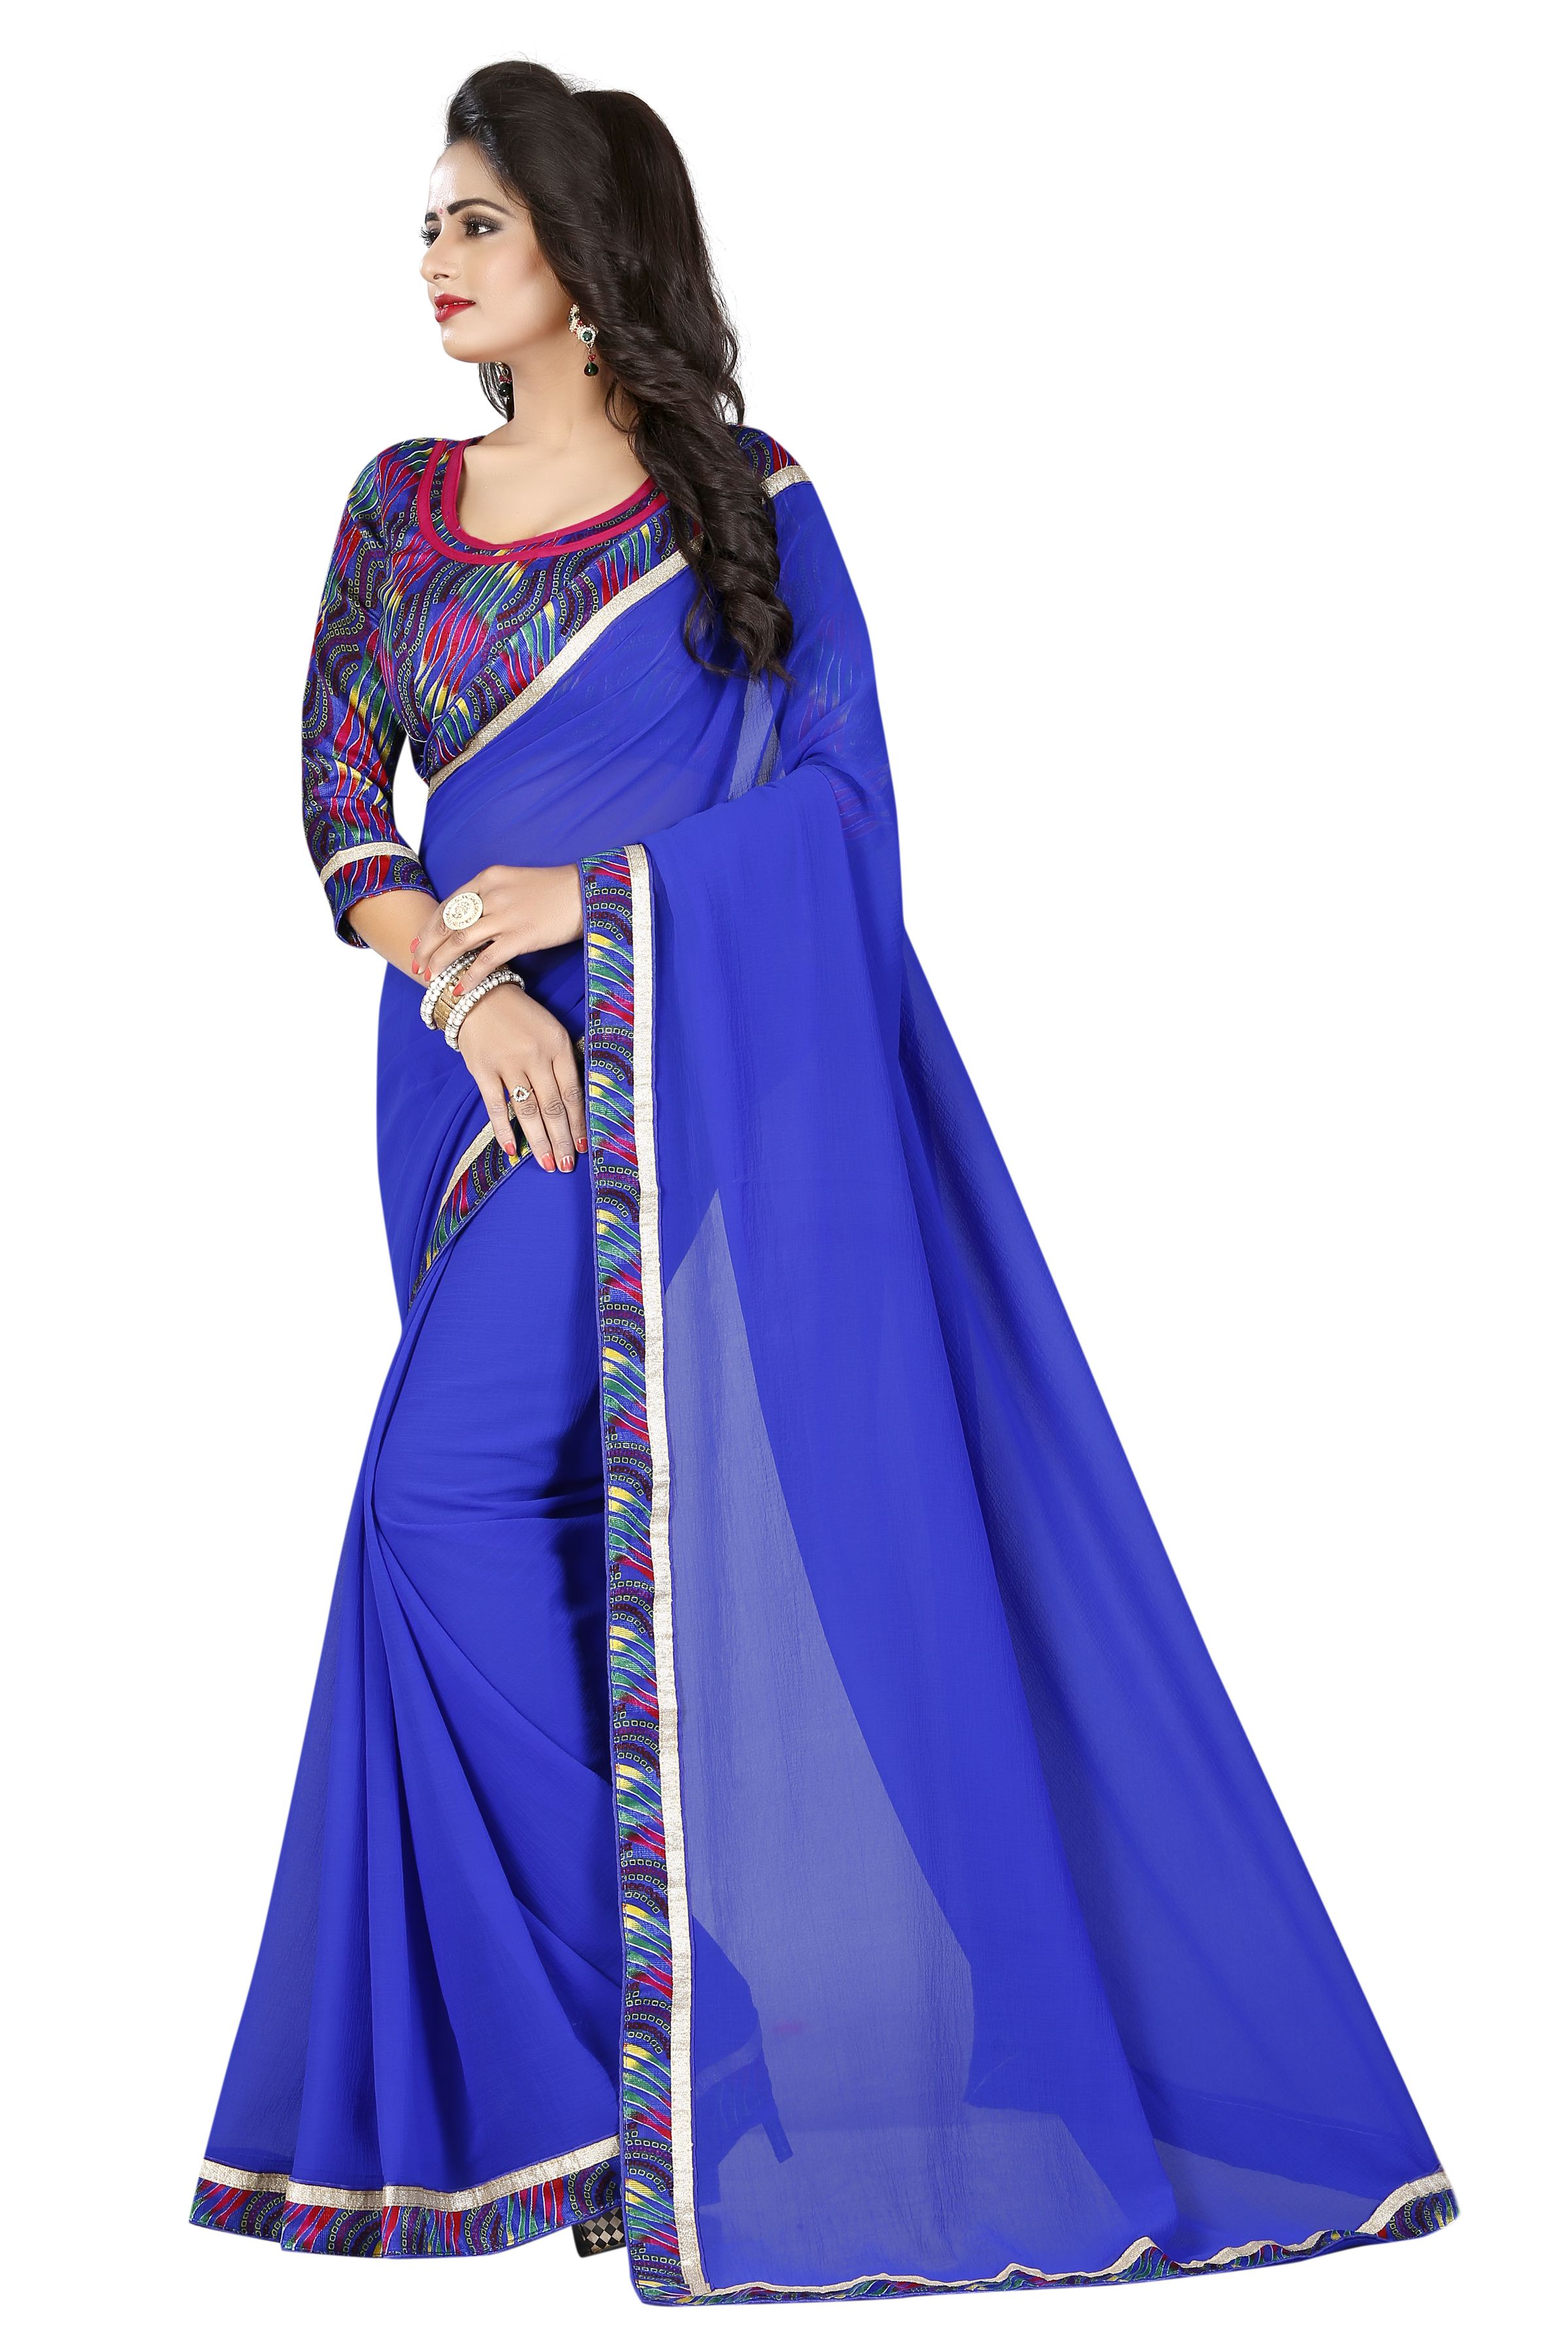 Navanya Couture Blue Chiffon Saree Buy Navanya Couture Blue Chiffon Saree Online At Low Price 